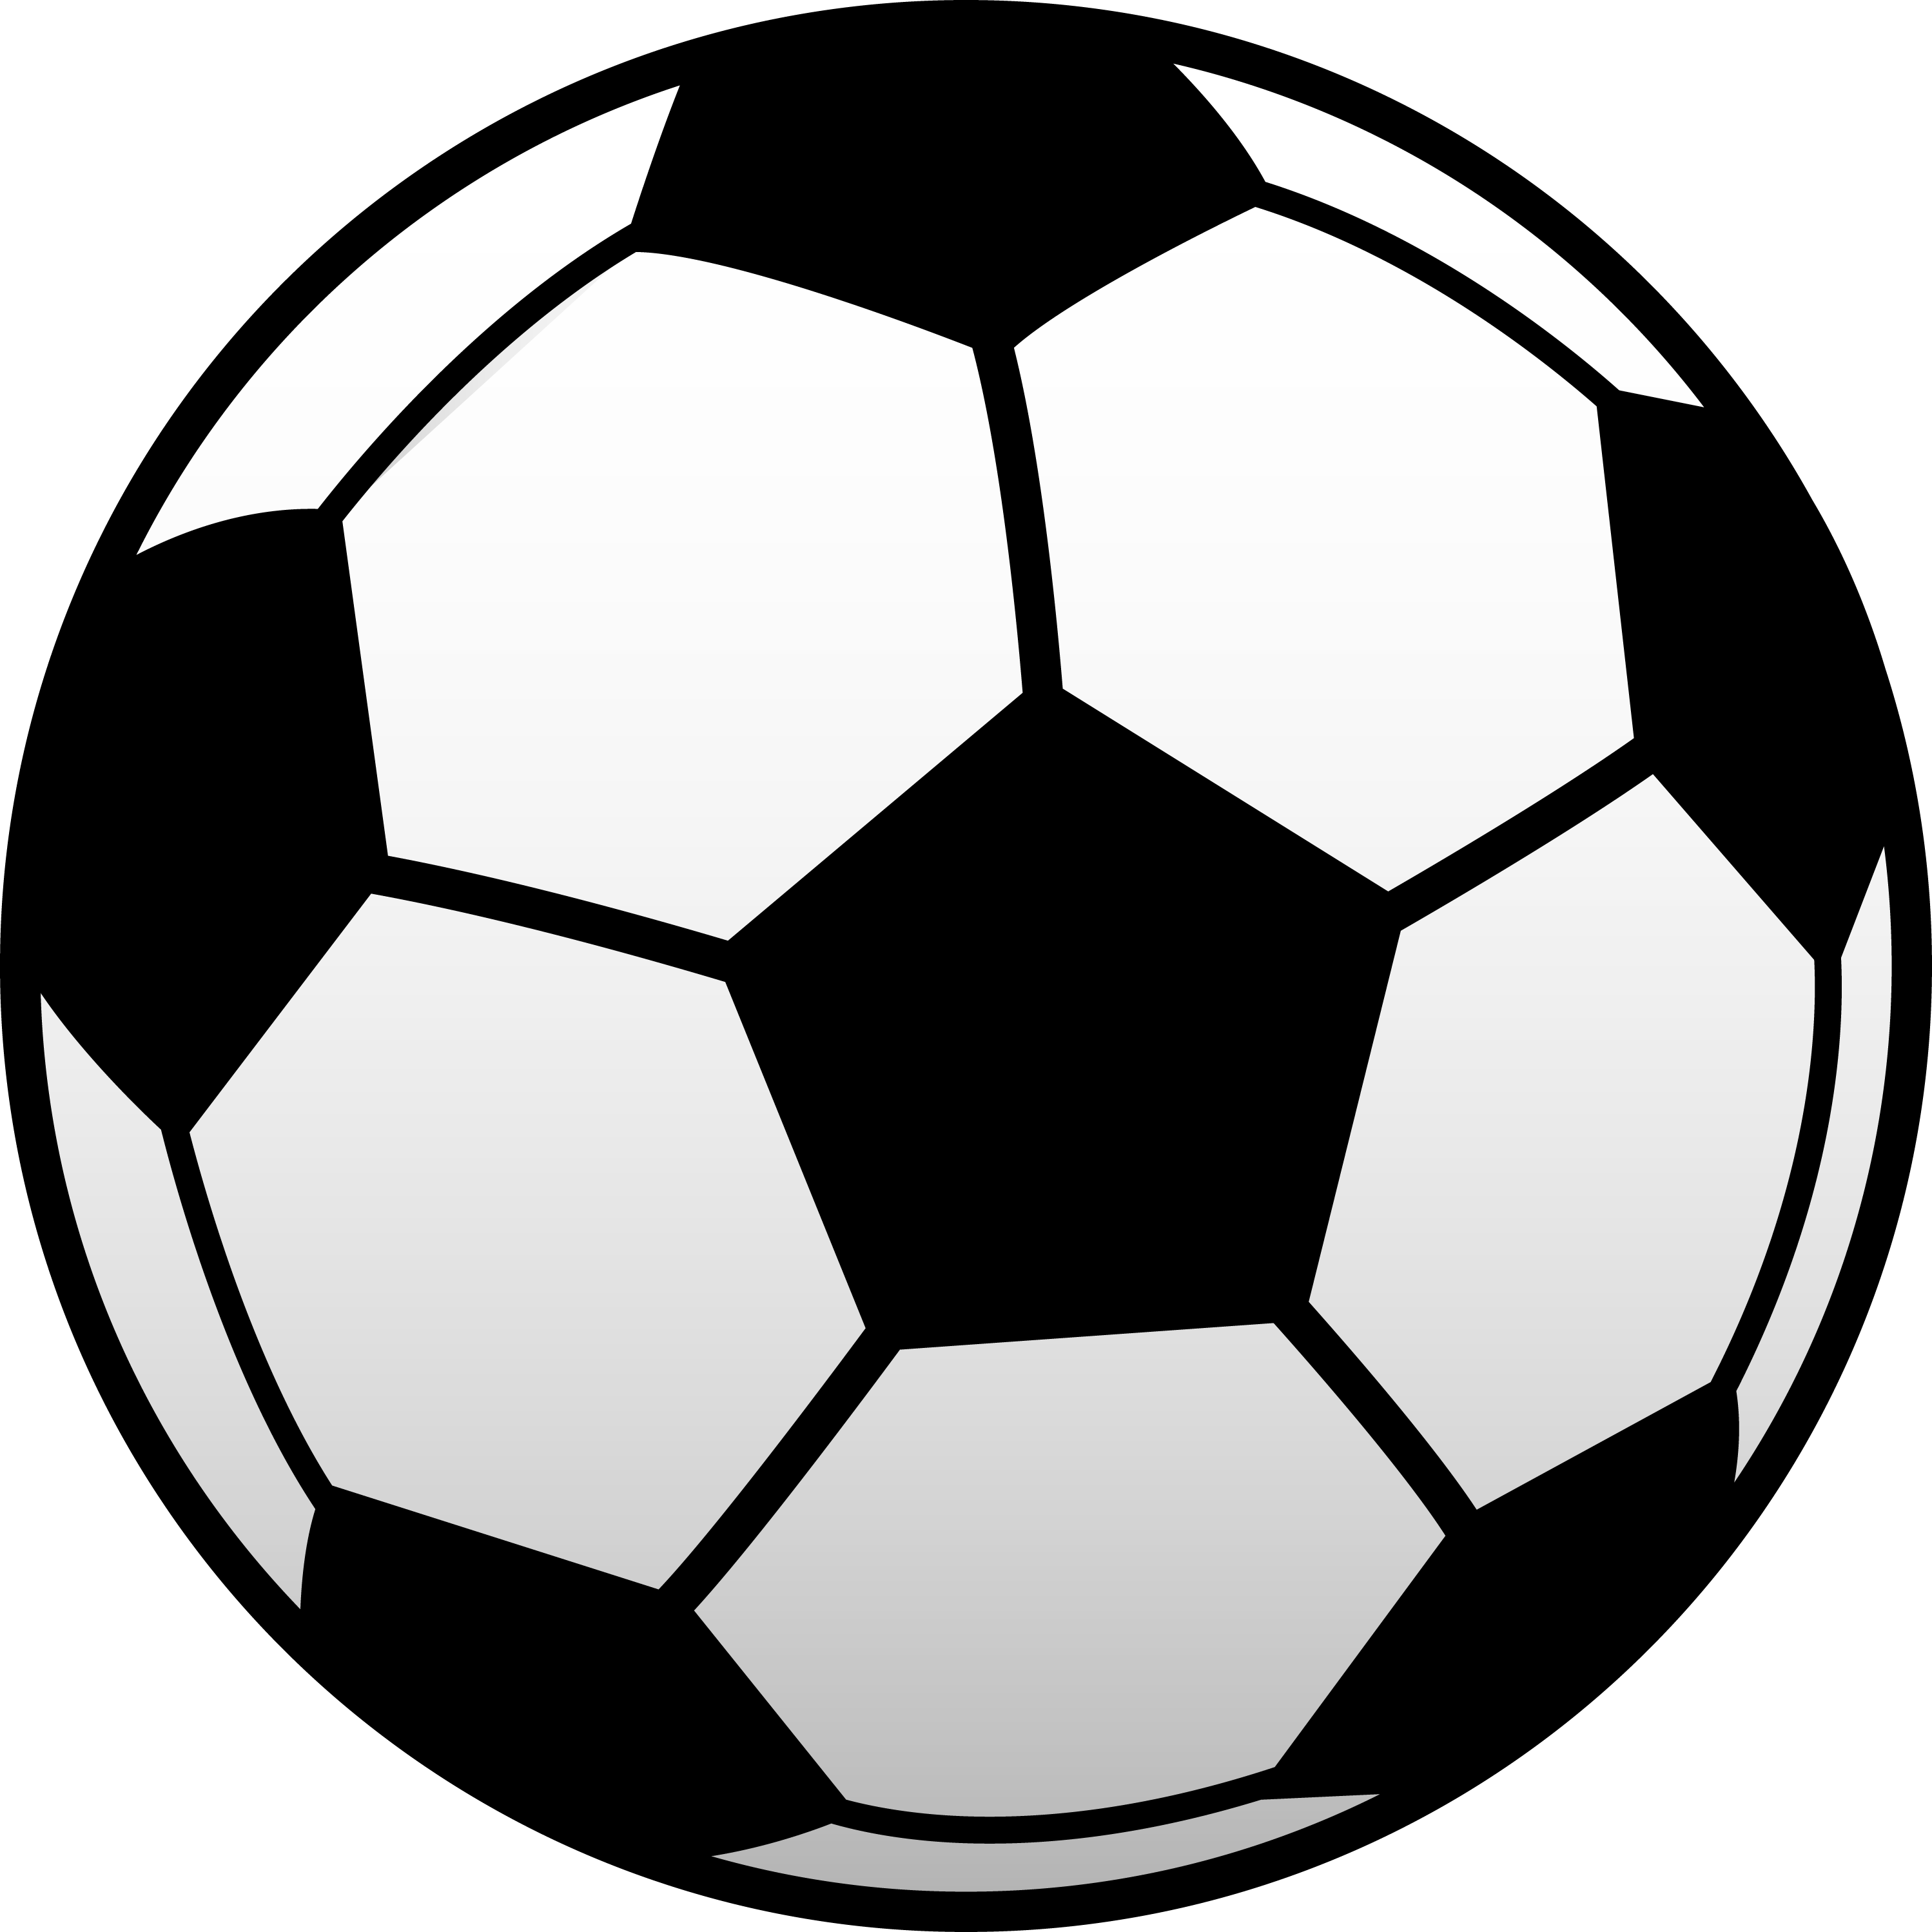 Microsoft clip art soccer ball